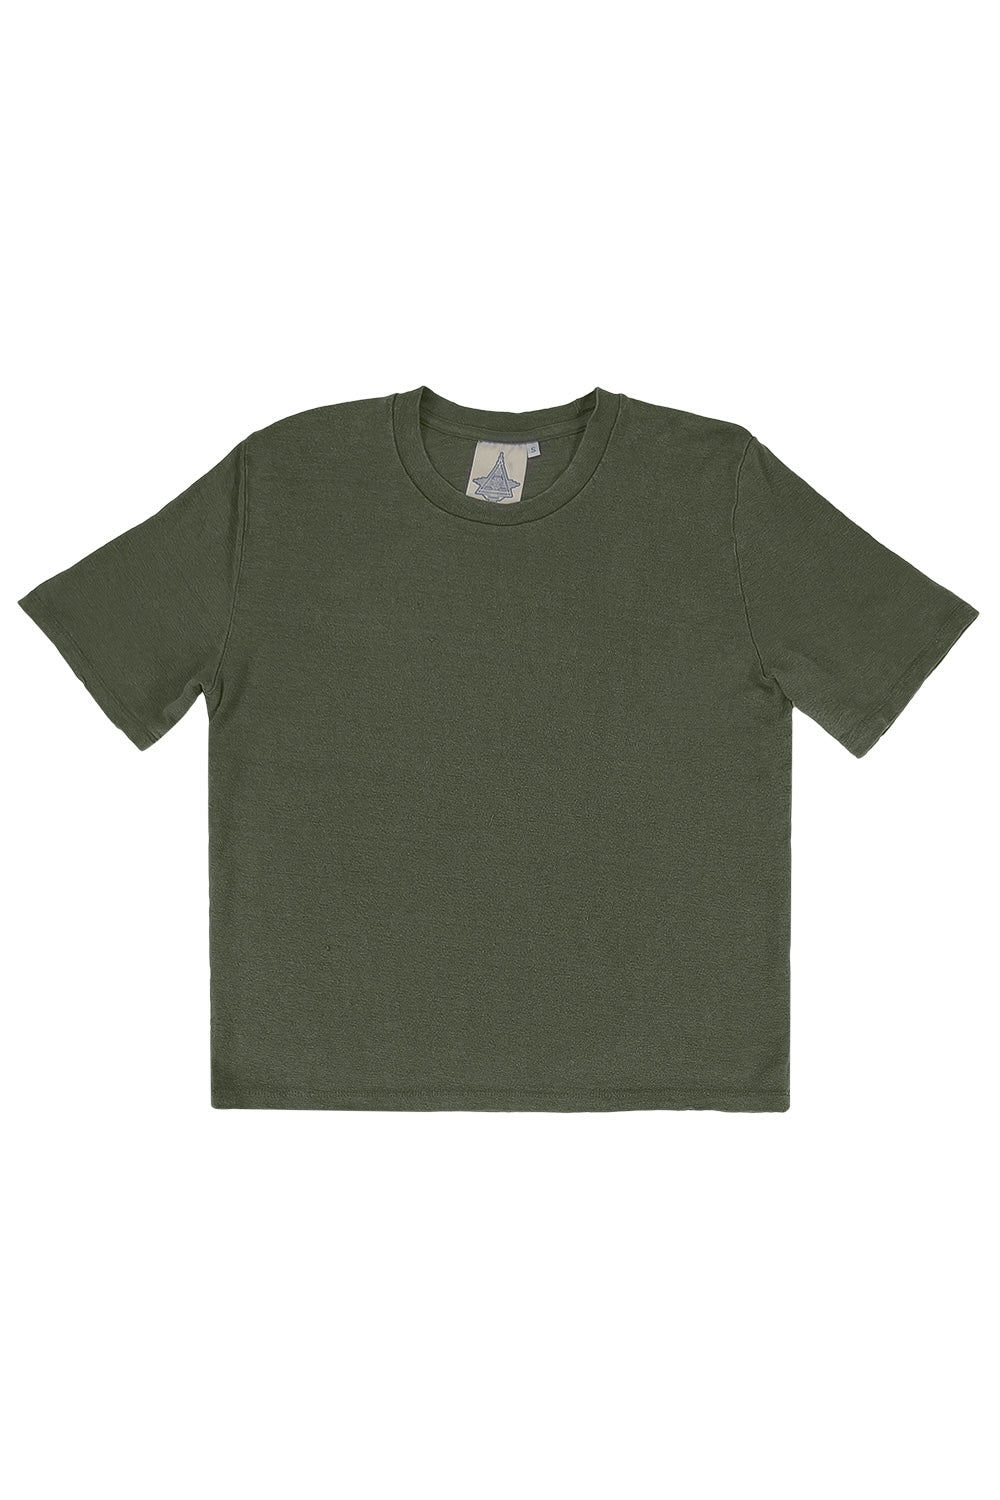 Dakota - 100% Hemp Cropped Tee | Jungmaven Hemp Clothing & Accessories / Color:Olive Green